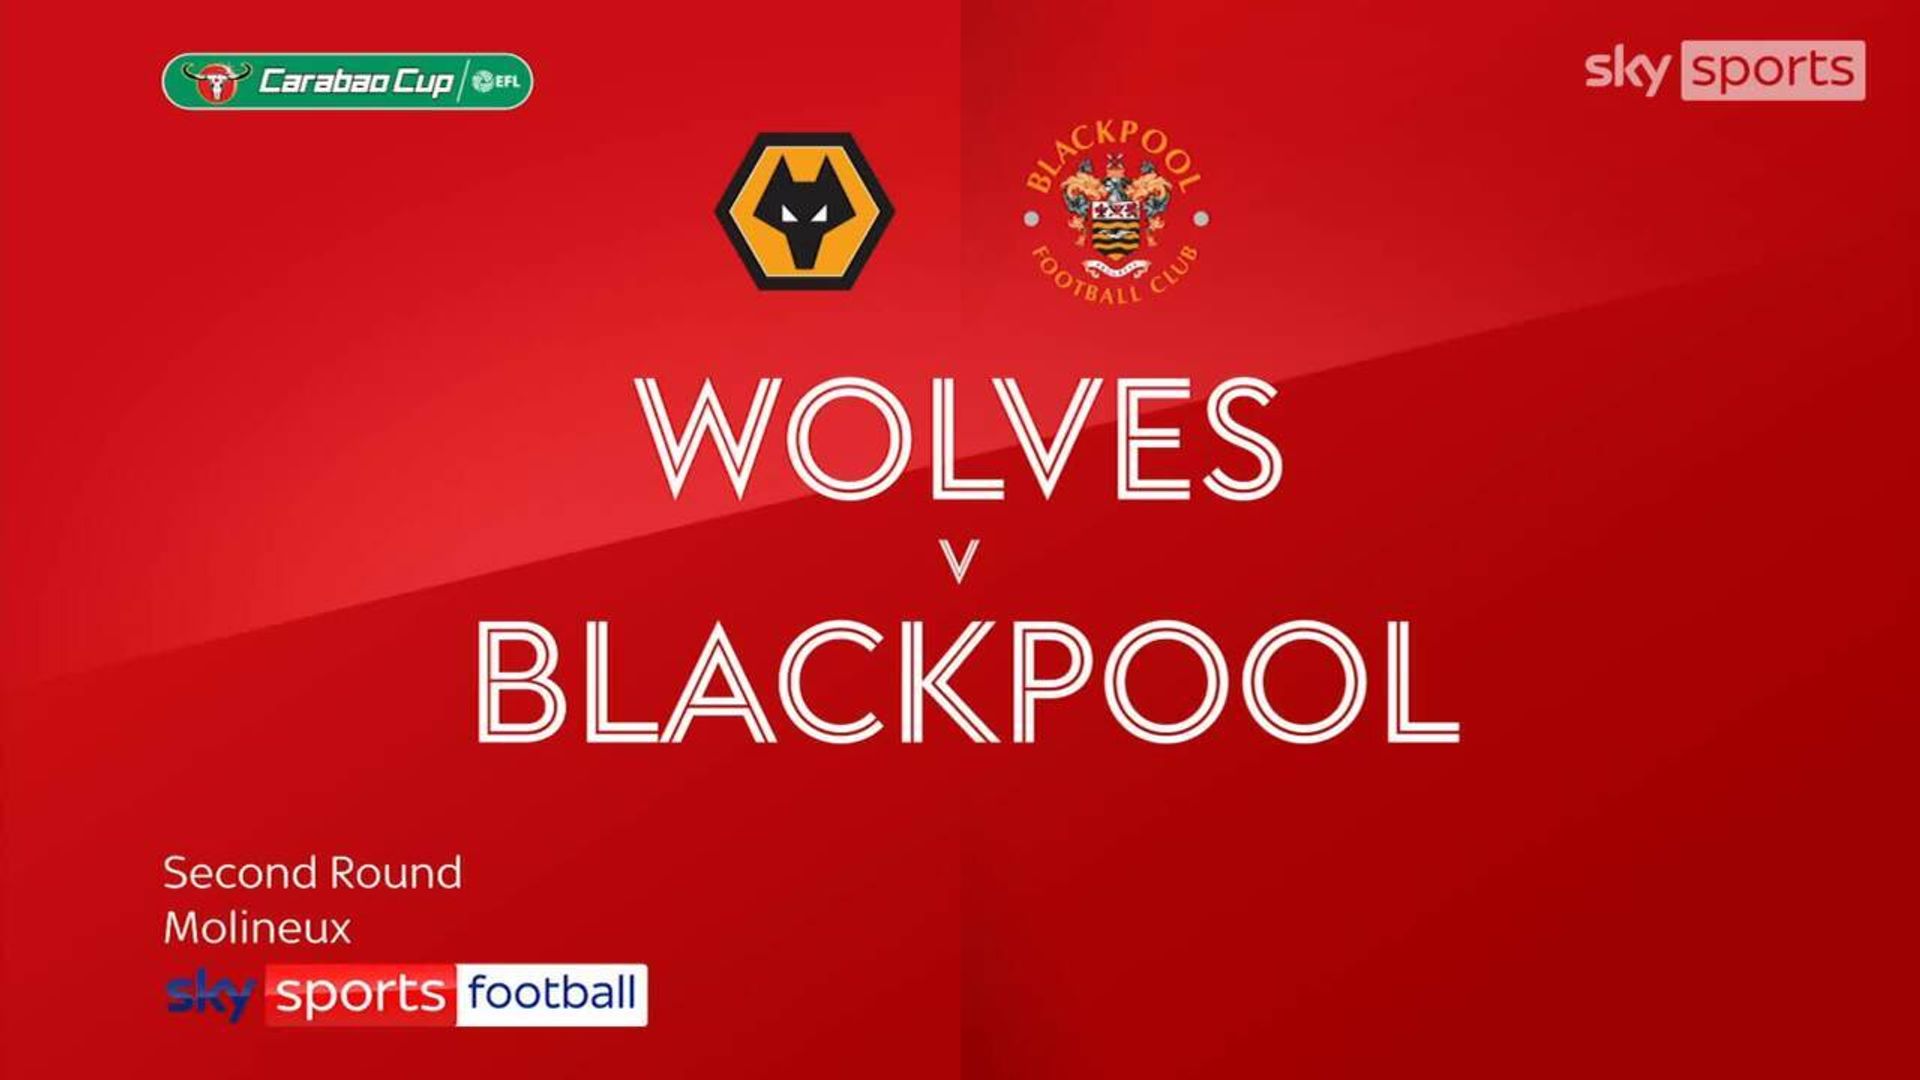 Wolves 5-0 Blackpool